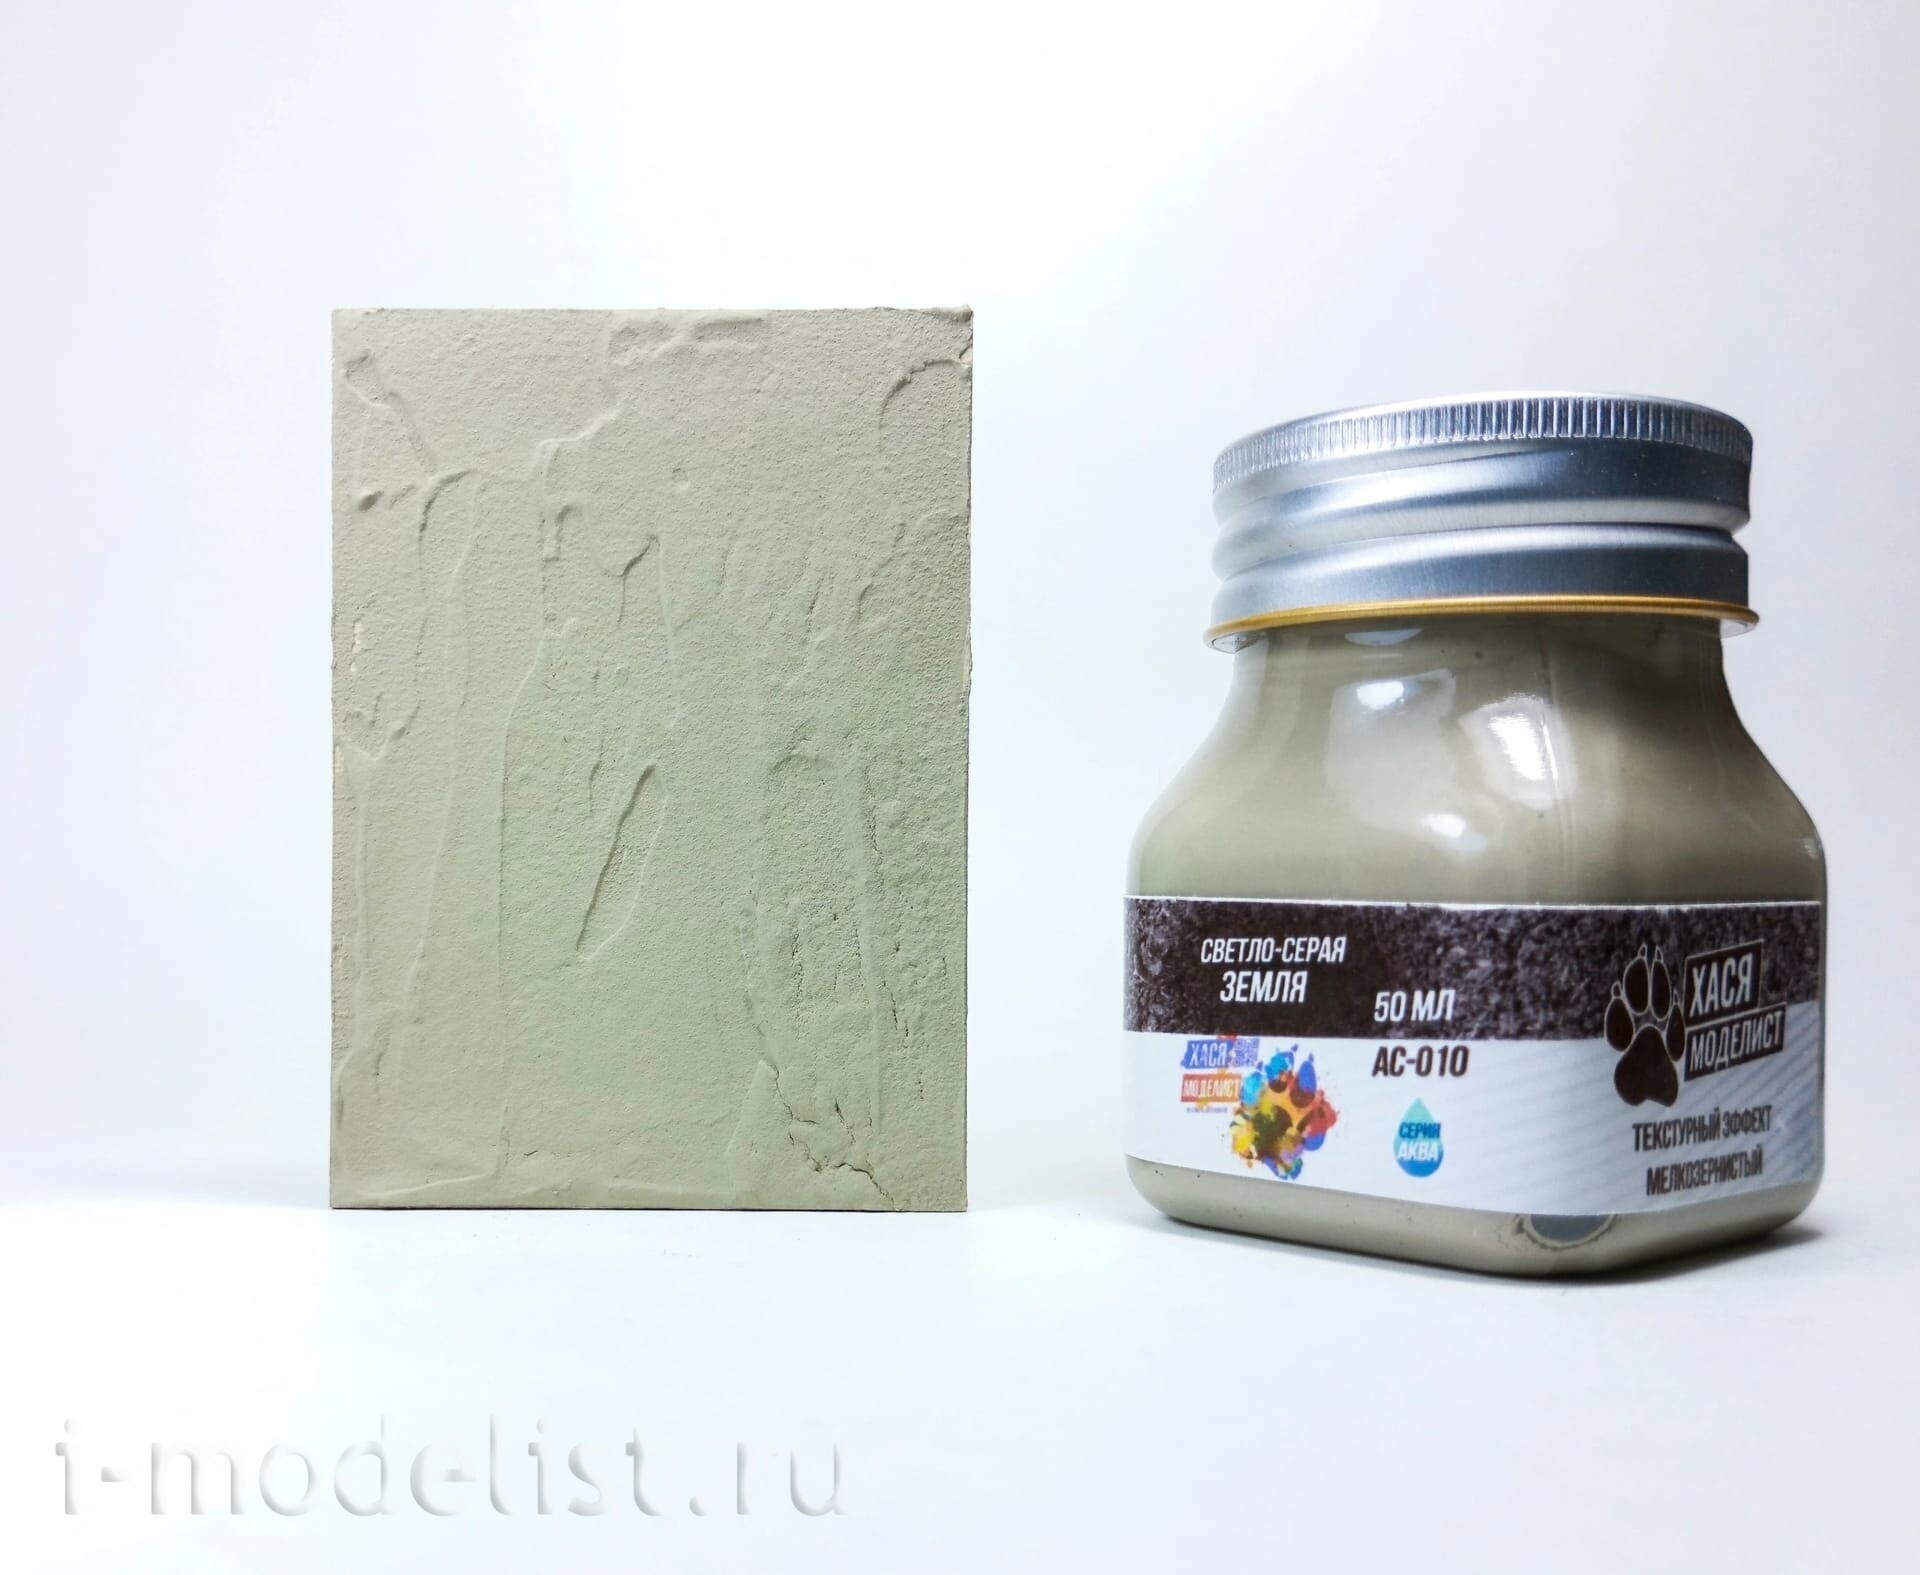 AS010 Hasya Modeler Acrylic mixture, light gray earth, fine-grained, 50 ml